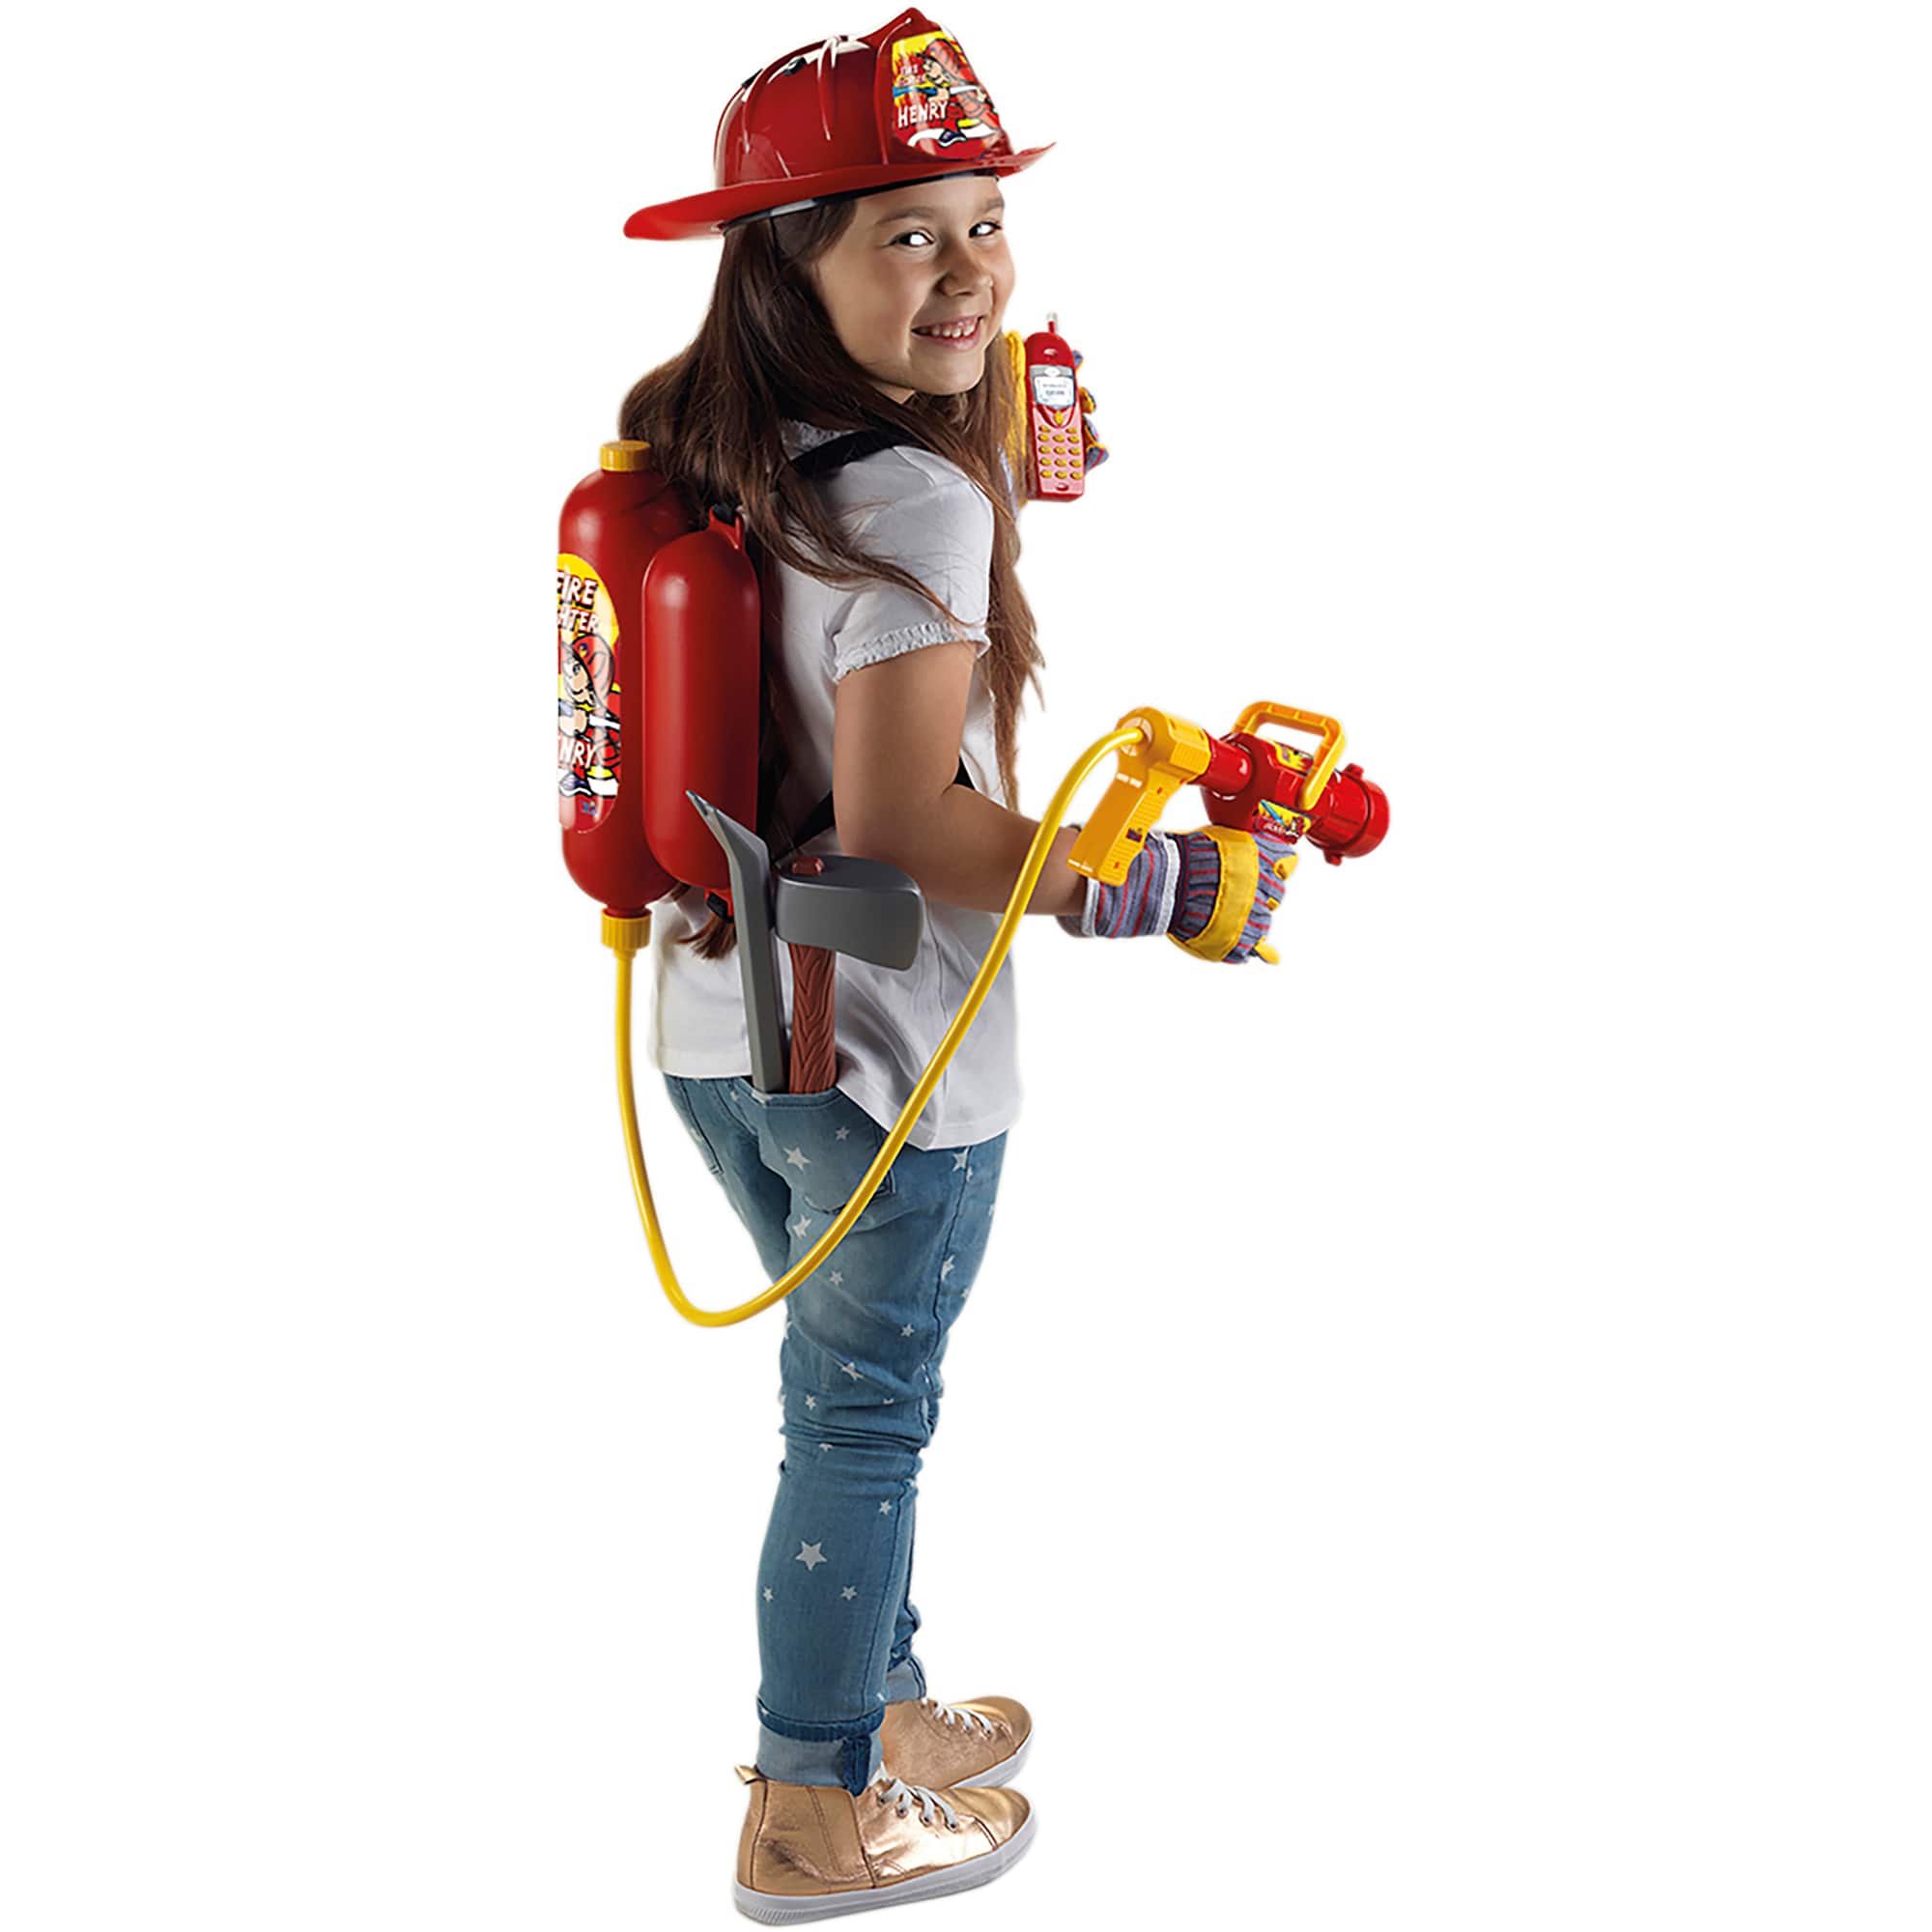 Theo Klein Firefighter Henry Fireman&#x27;s Water Sprayer Toy